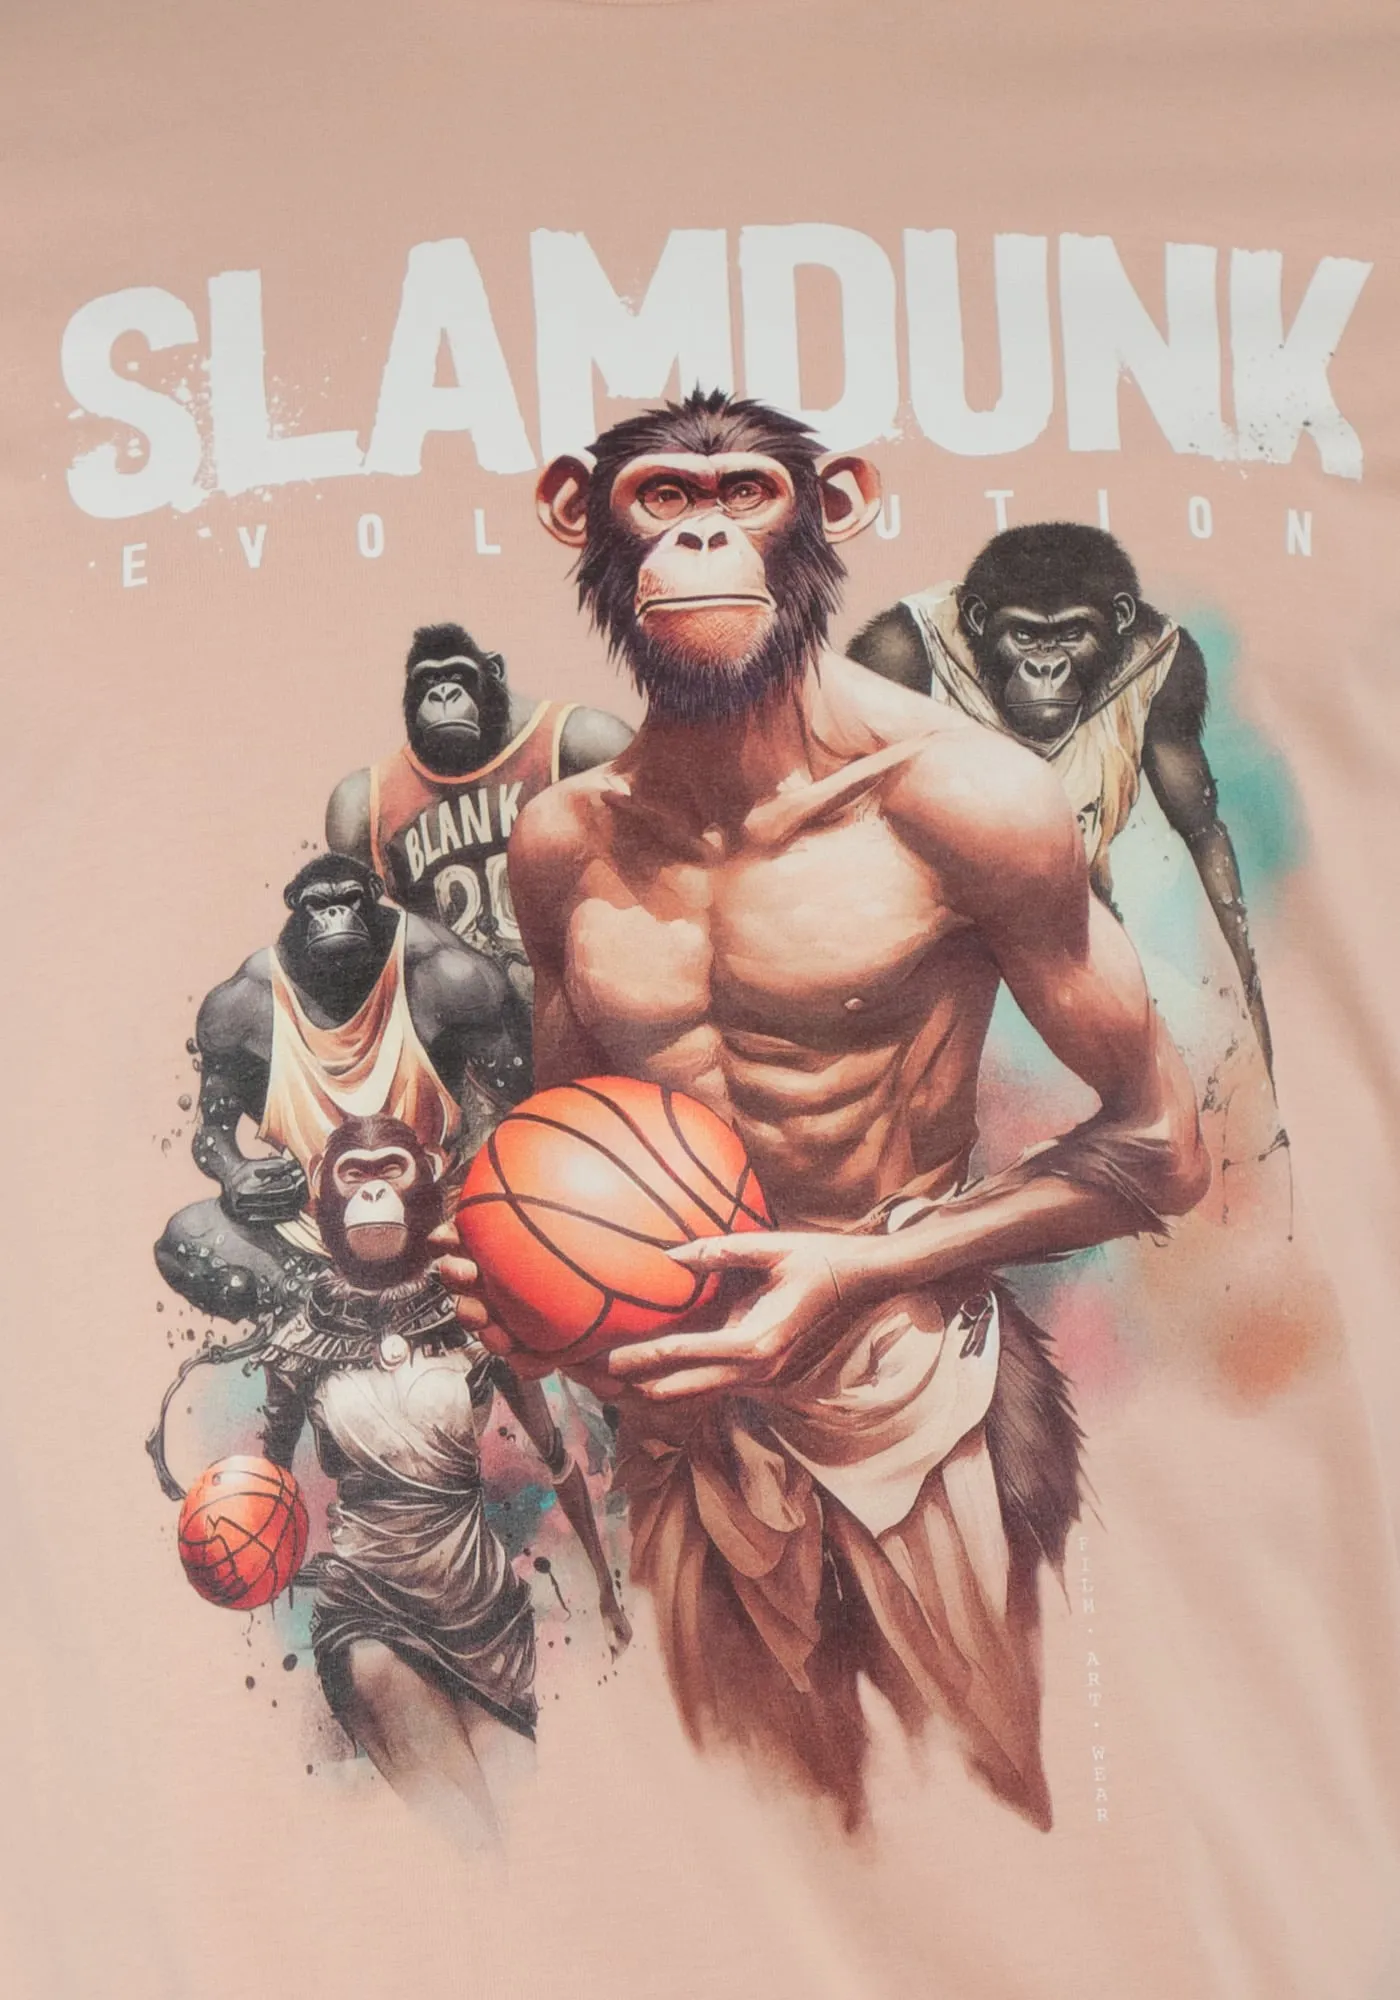 Closeup Slamdunk Evolution in Farbe rose basketball Shirt